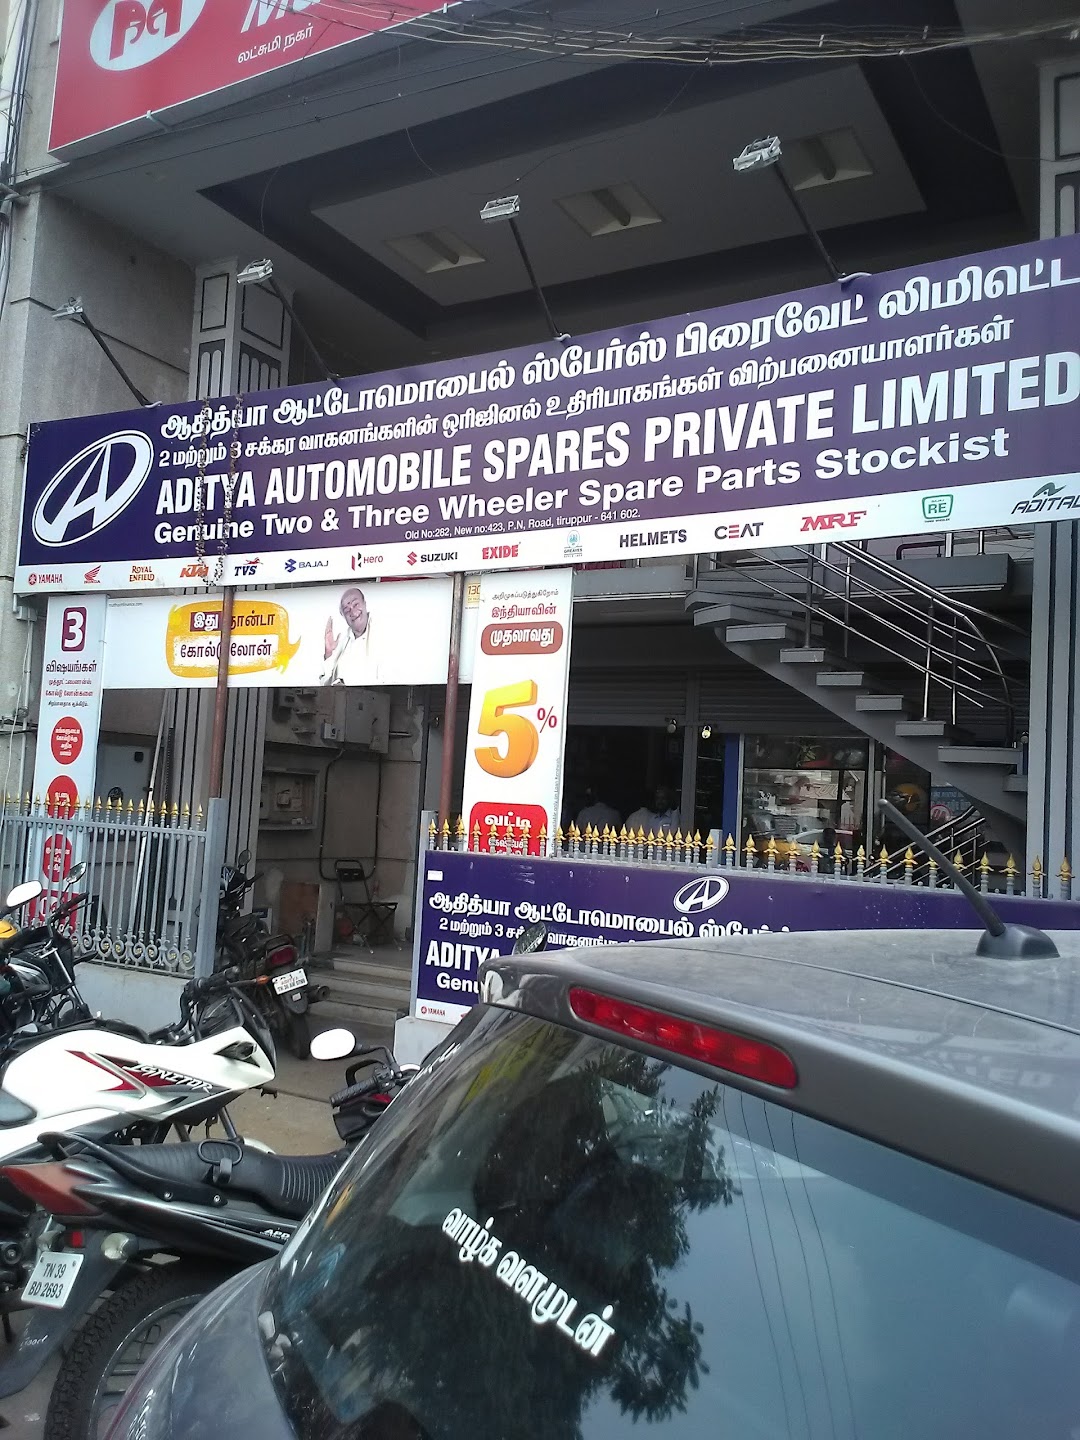 Aditya Automobile Spares Pvt Ltd